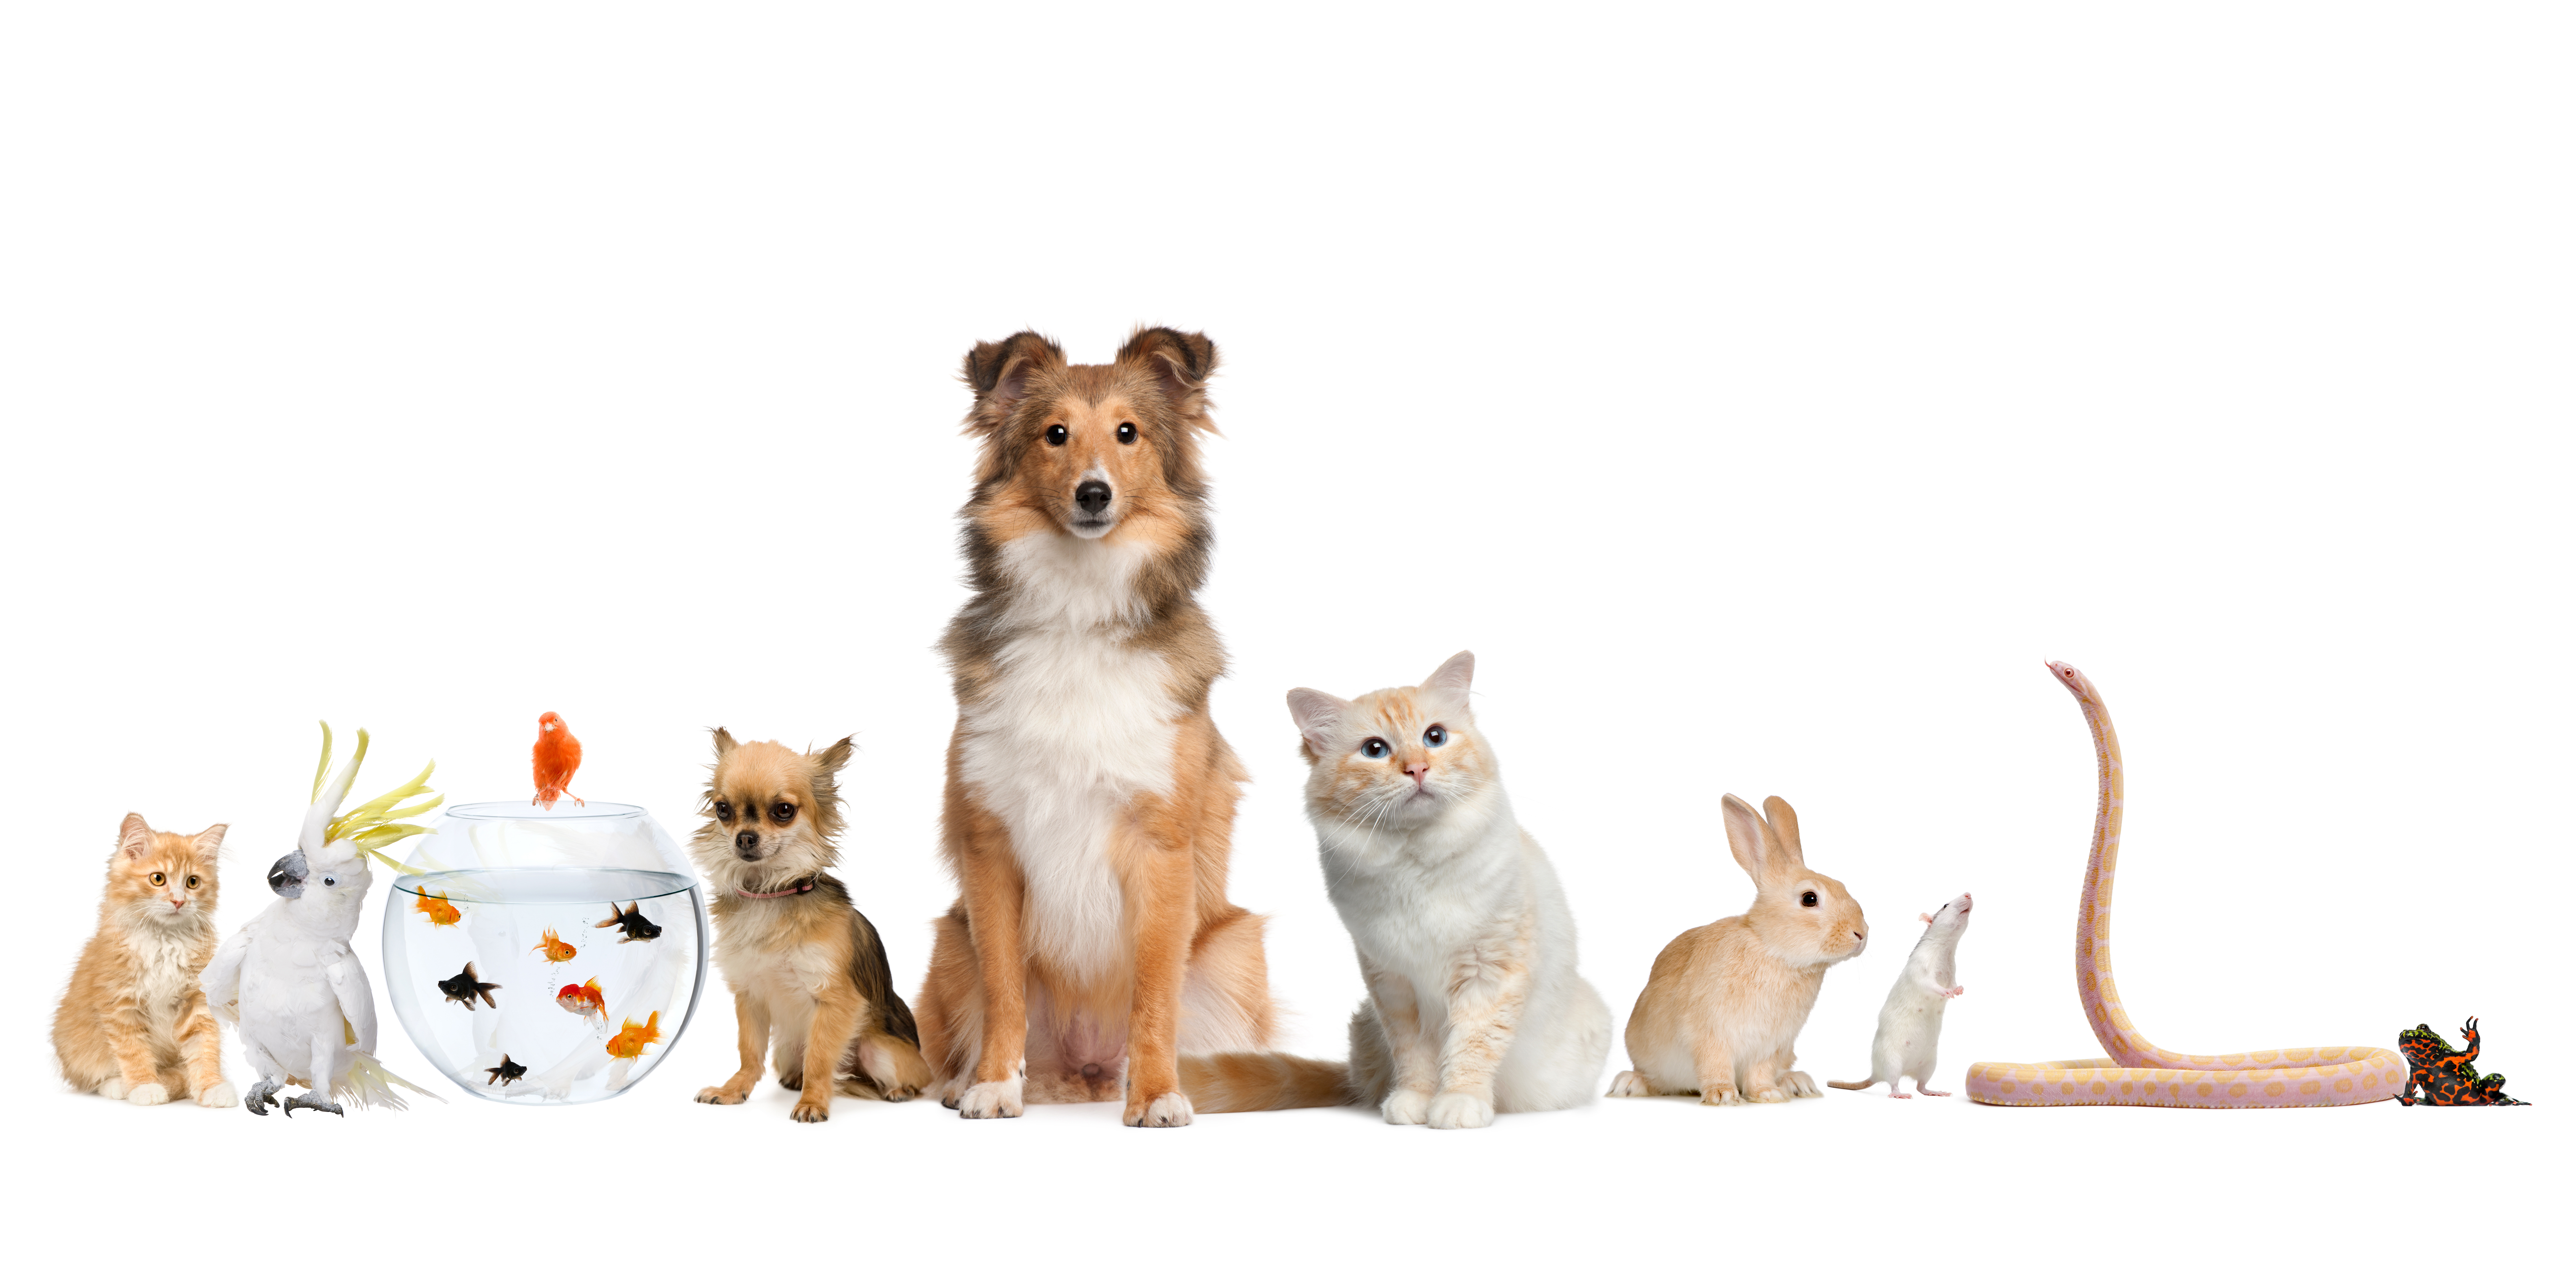 Animal Family 8k Ultra HD Wallpaper | Background Image ...